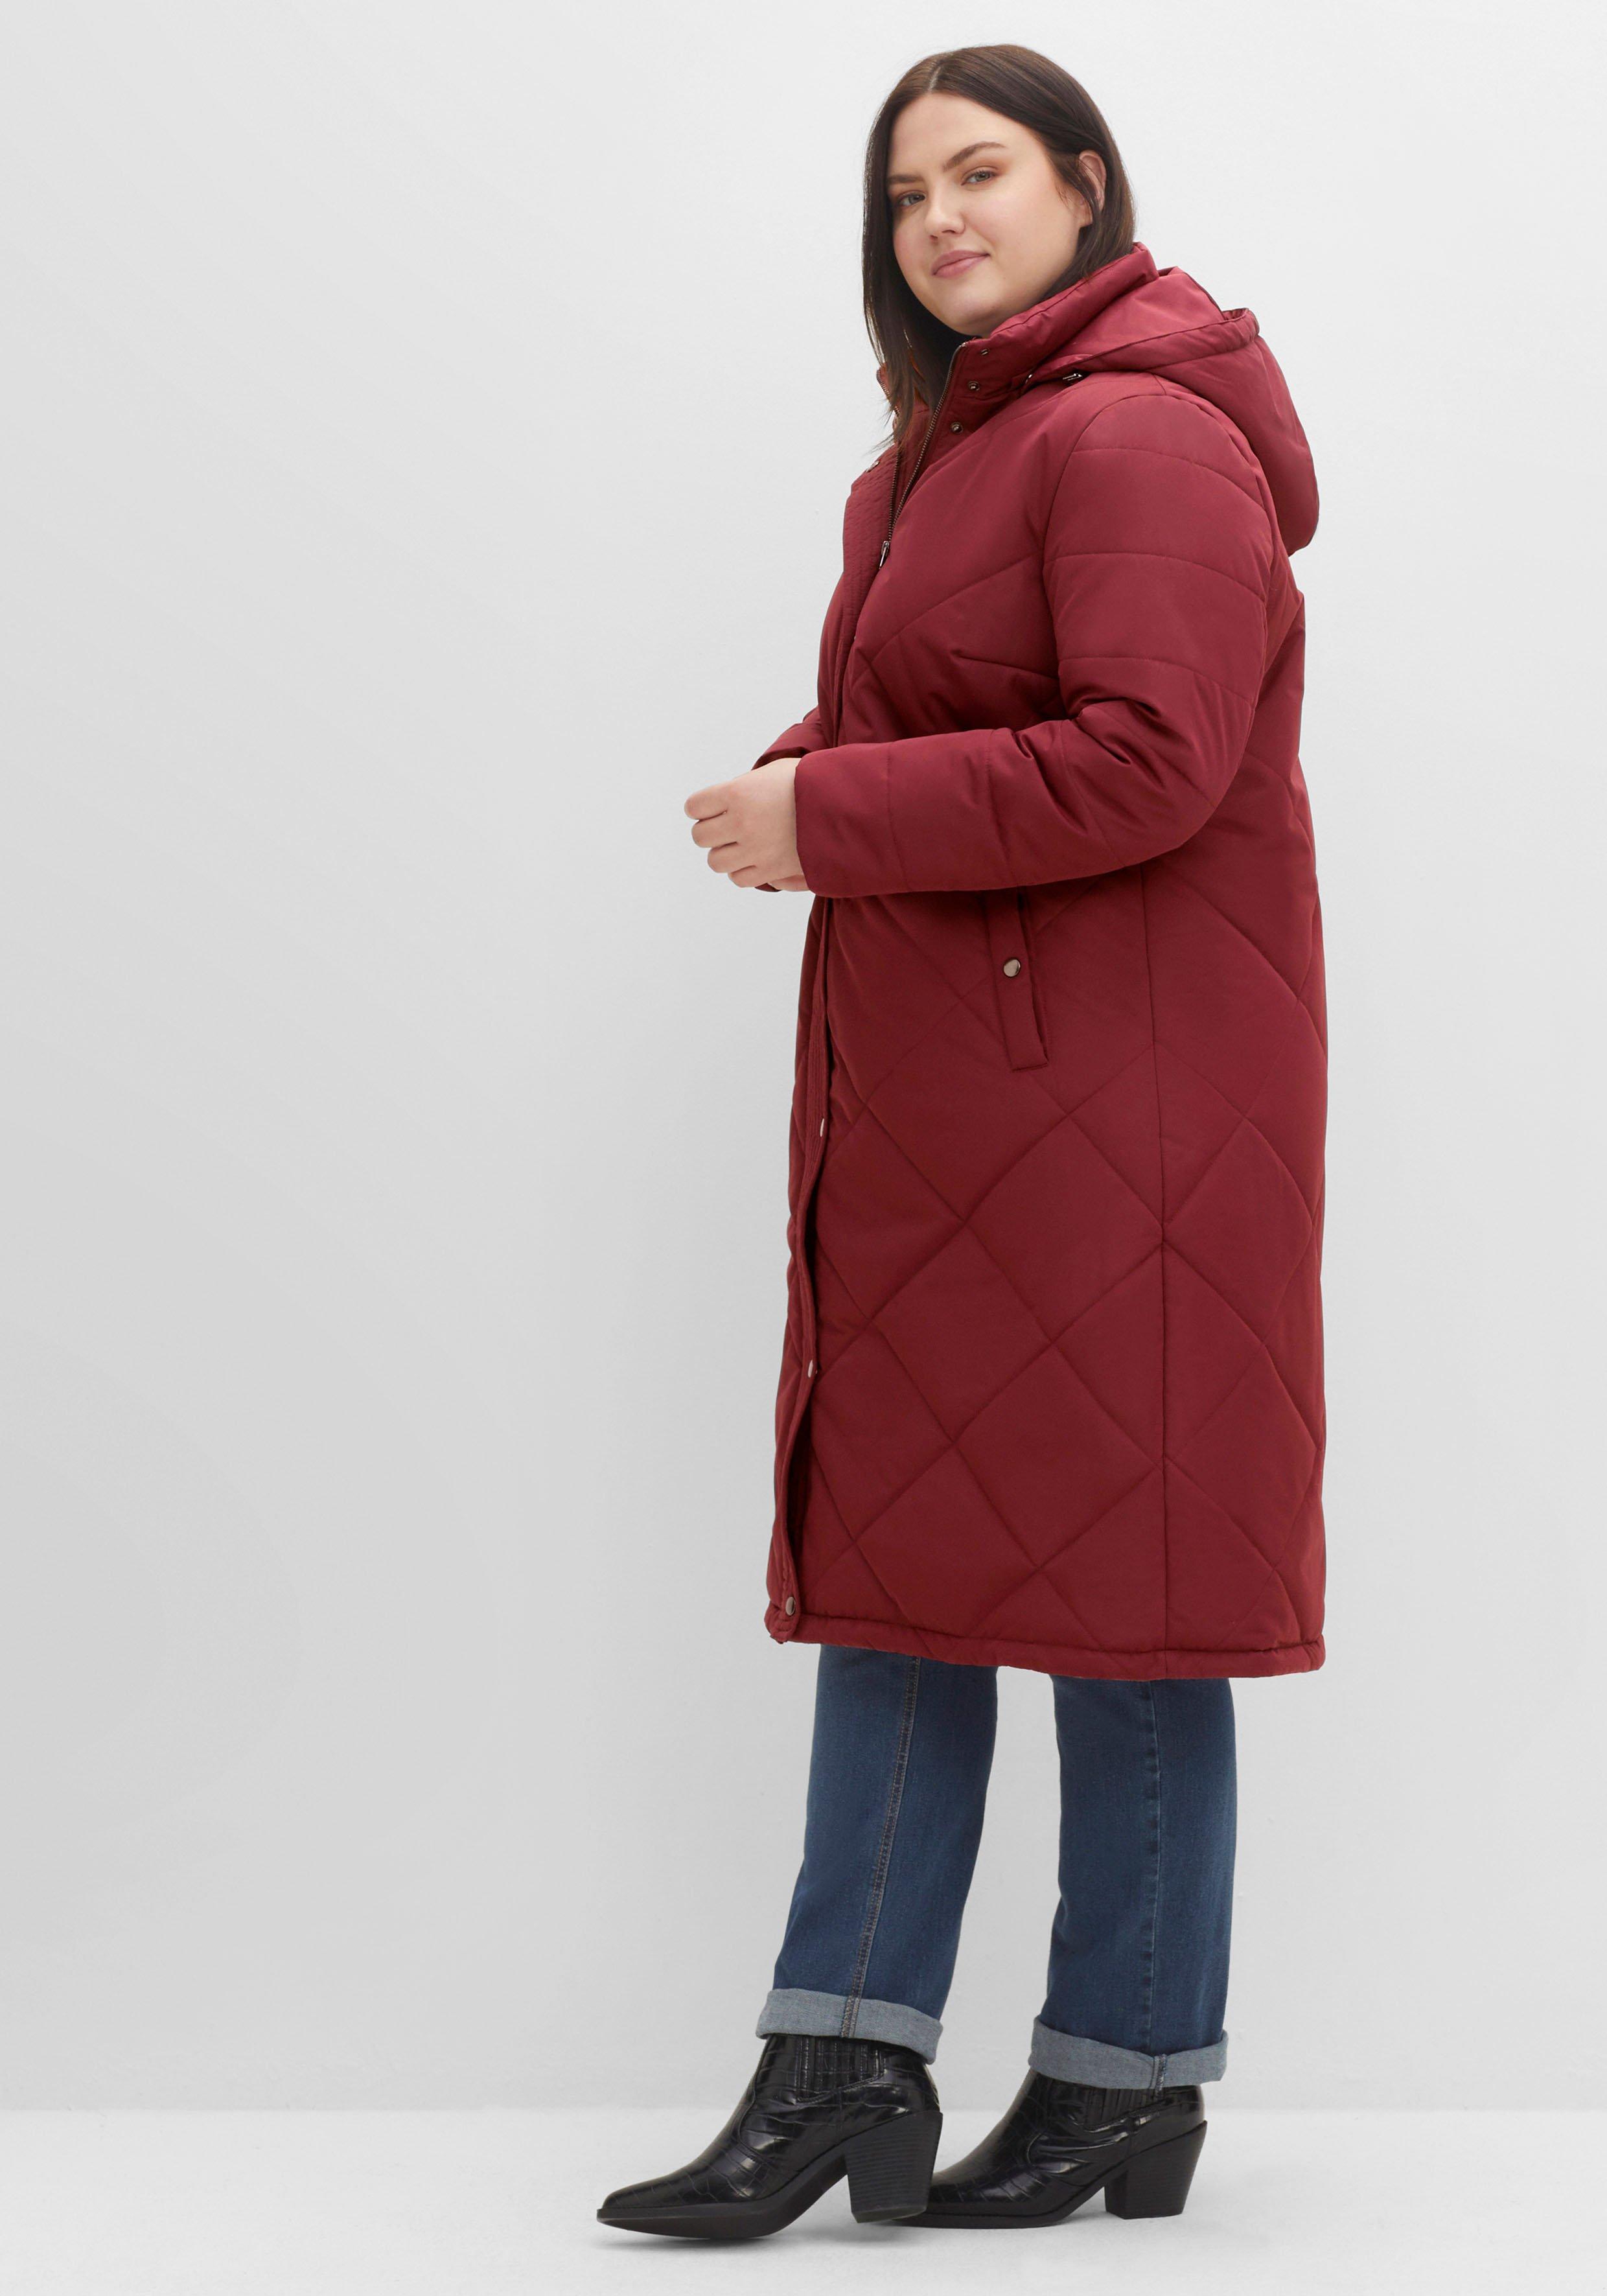 Damen Jacken & | ♥ rot Größen sheego große Size Plus Mäntel Mode